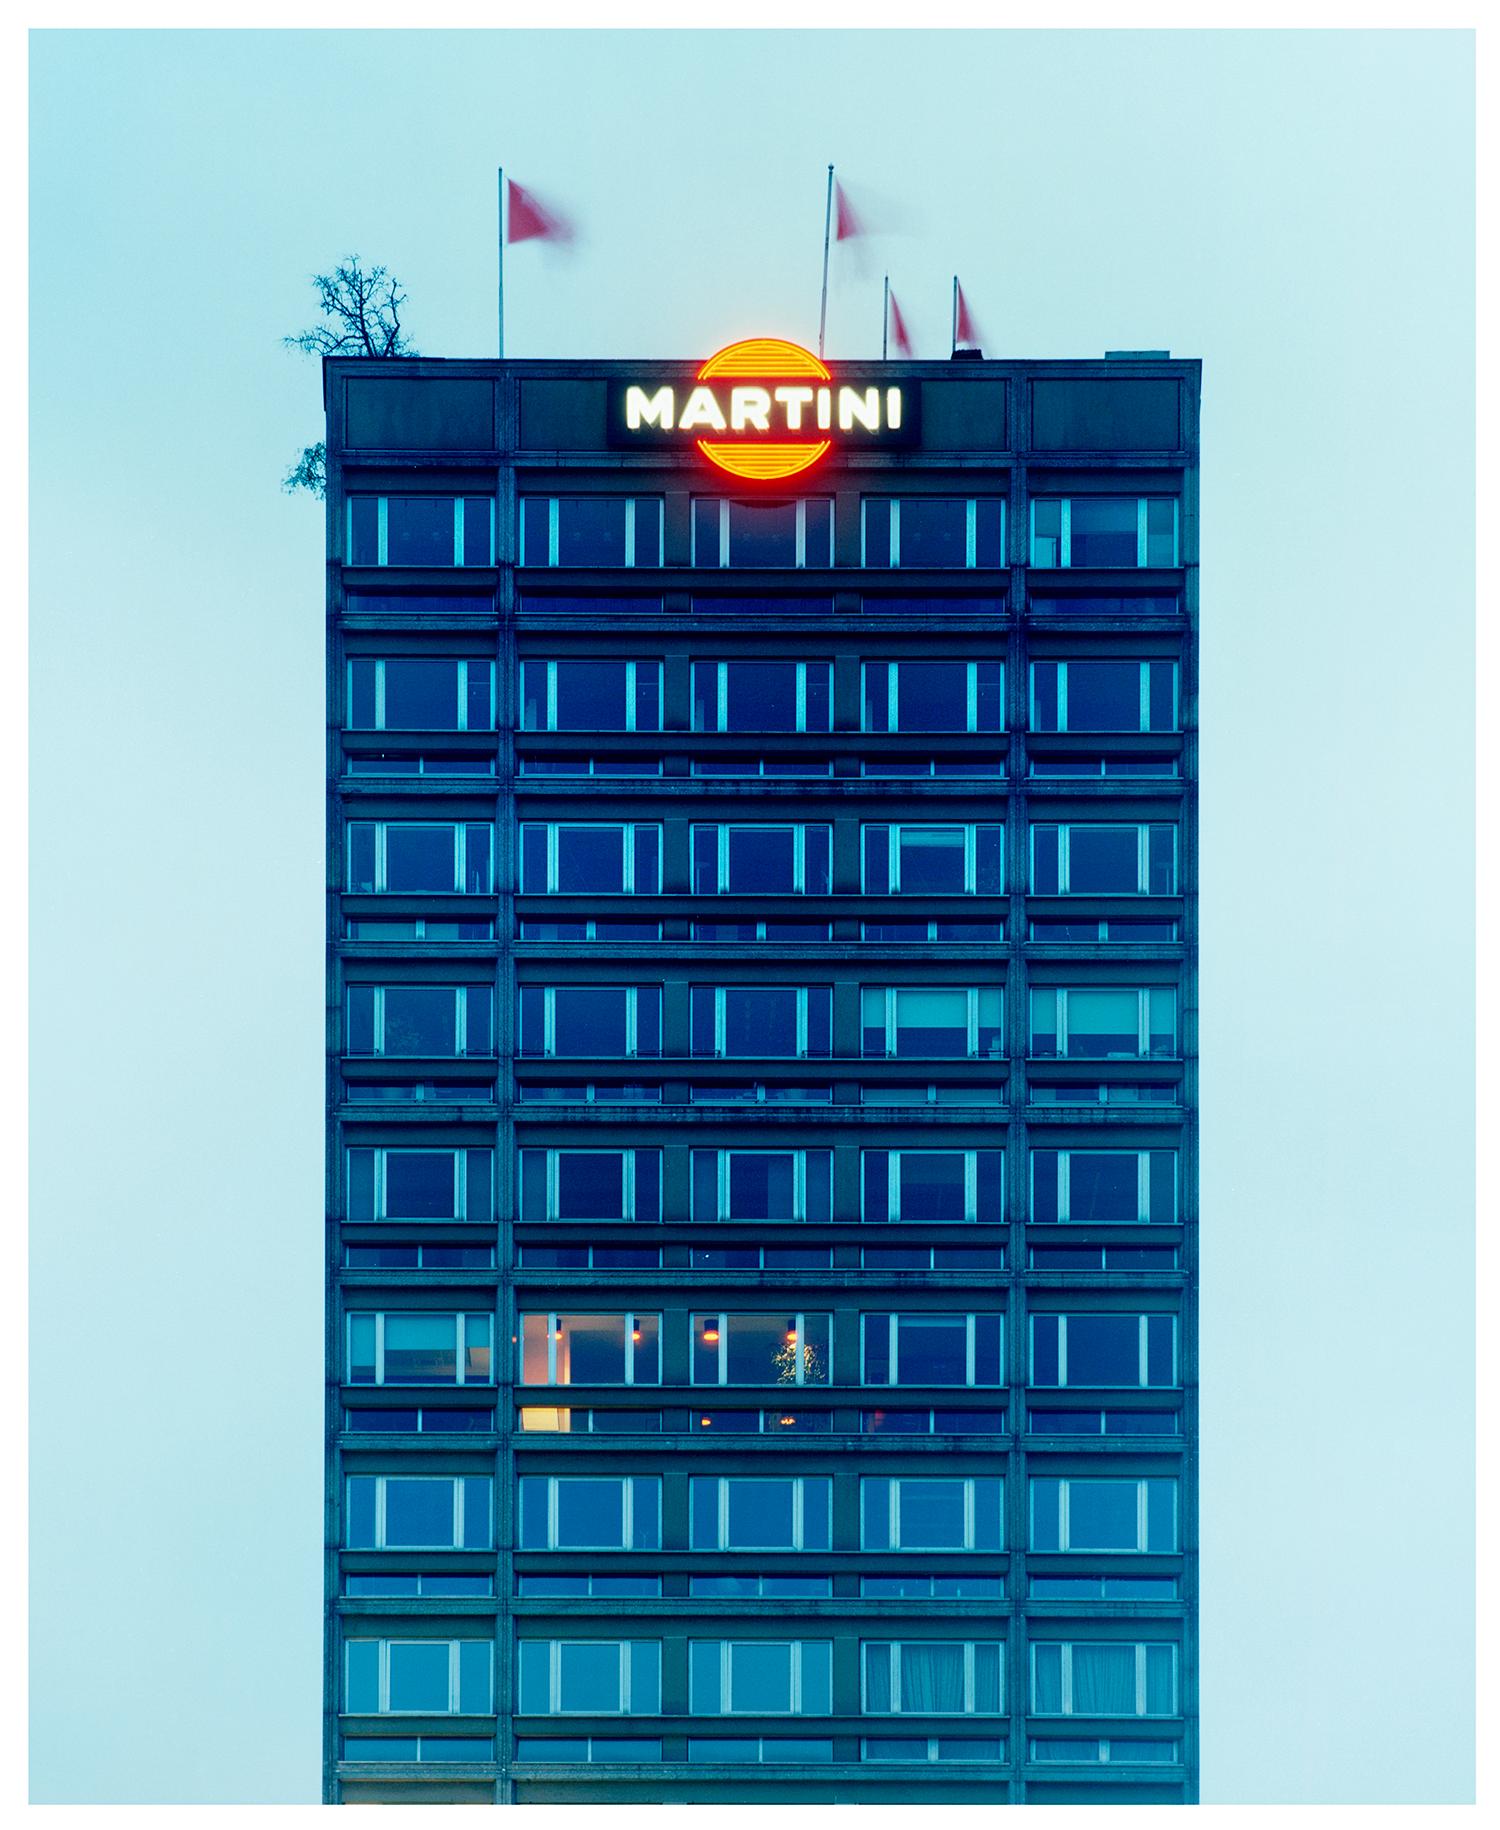 Richard Heeps Color Photograph – Blauer Martini, Mailand – Architekturfotografie in Farbfotografie